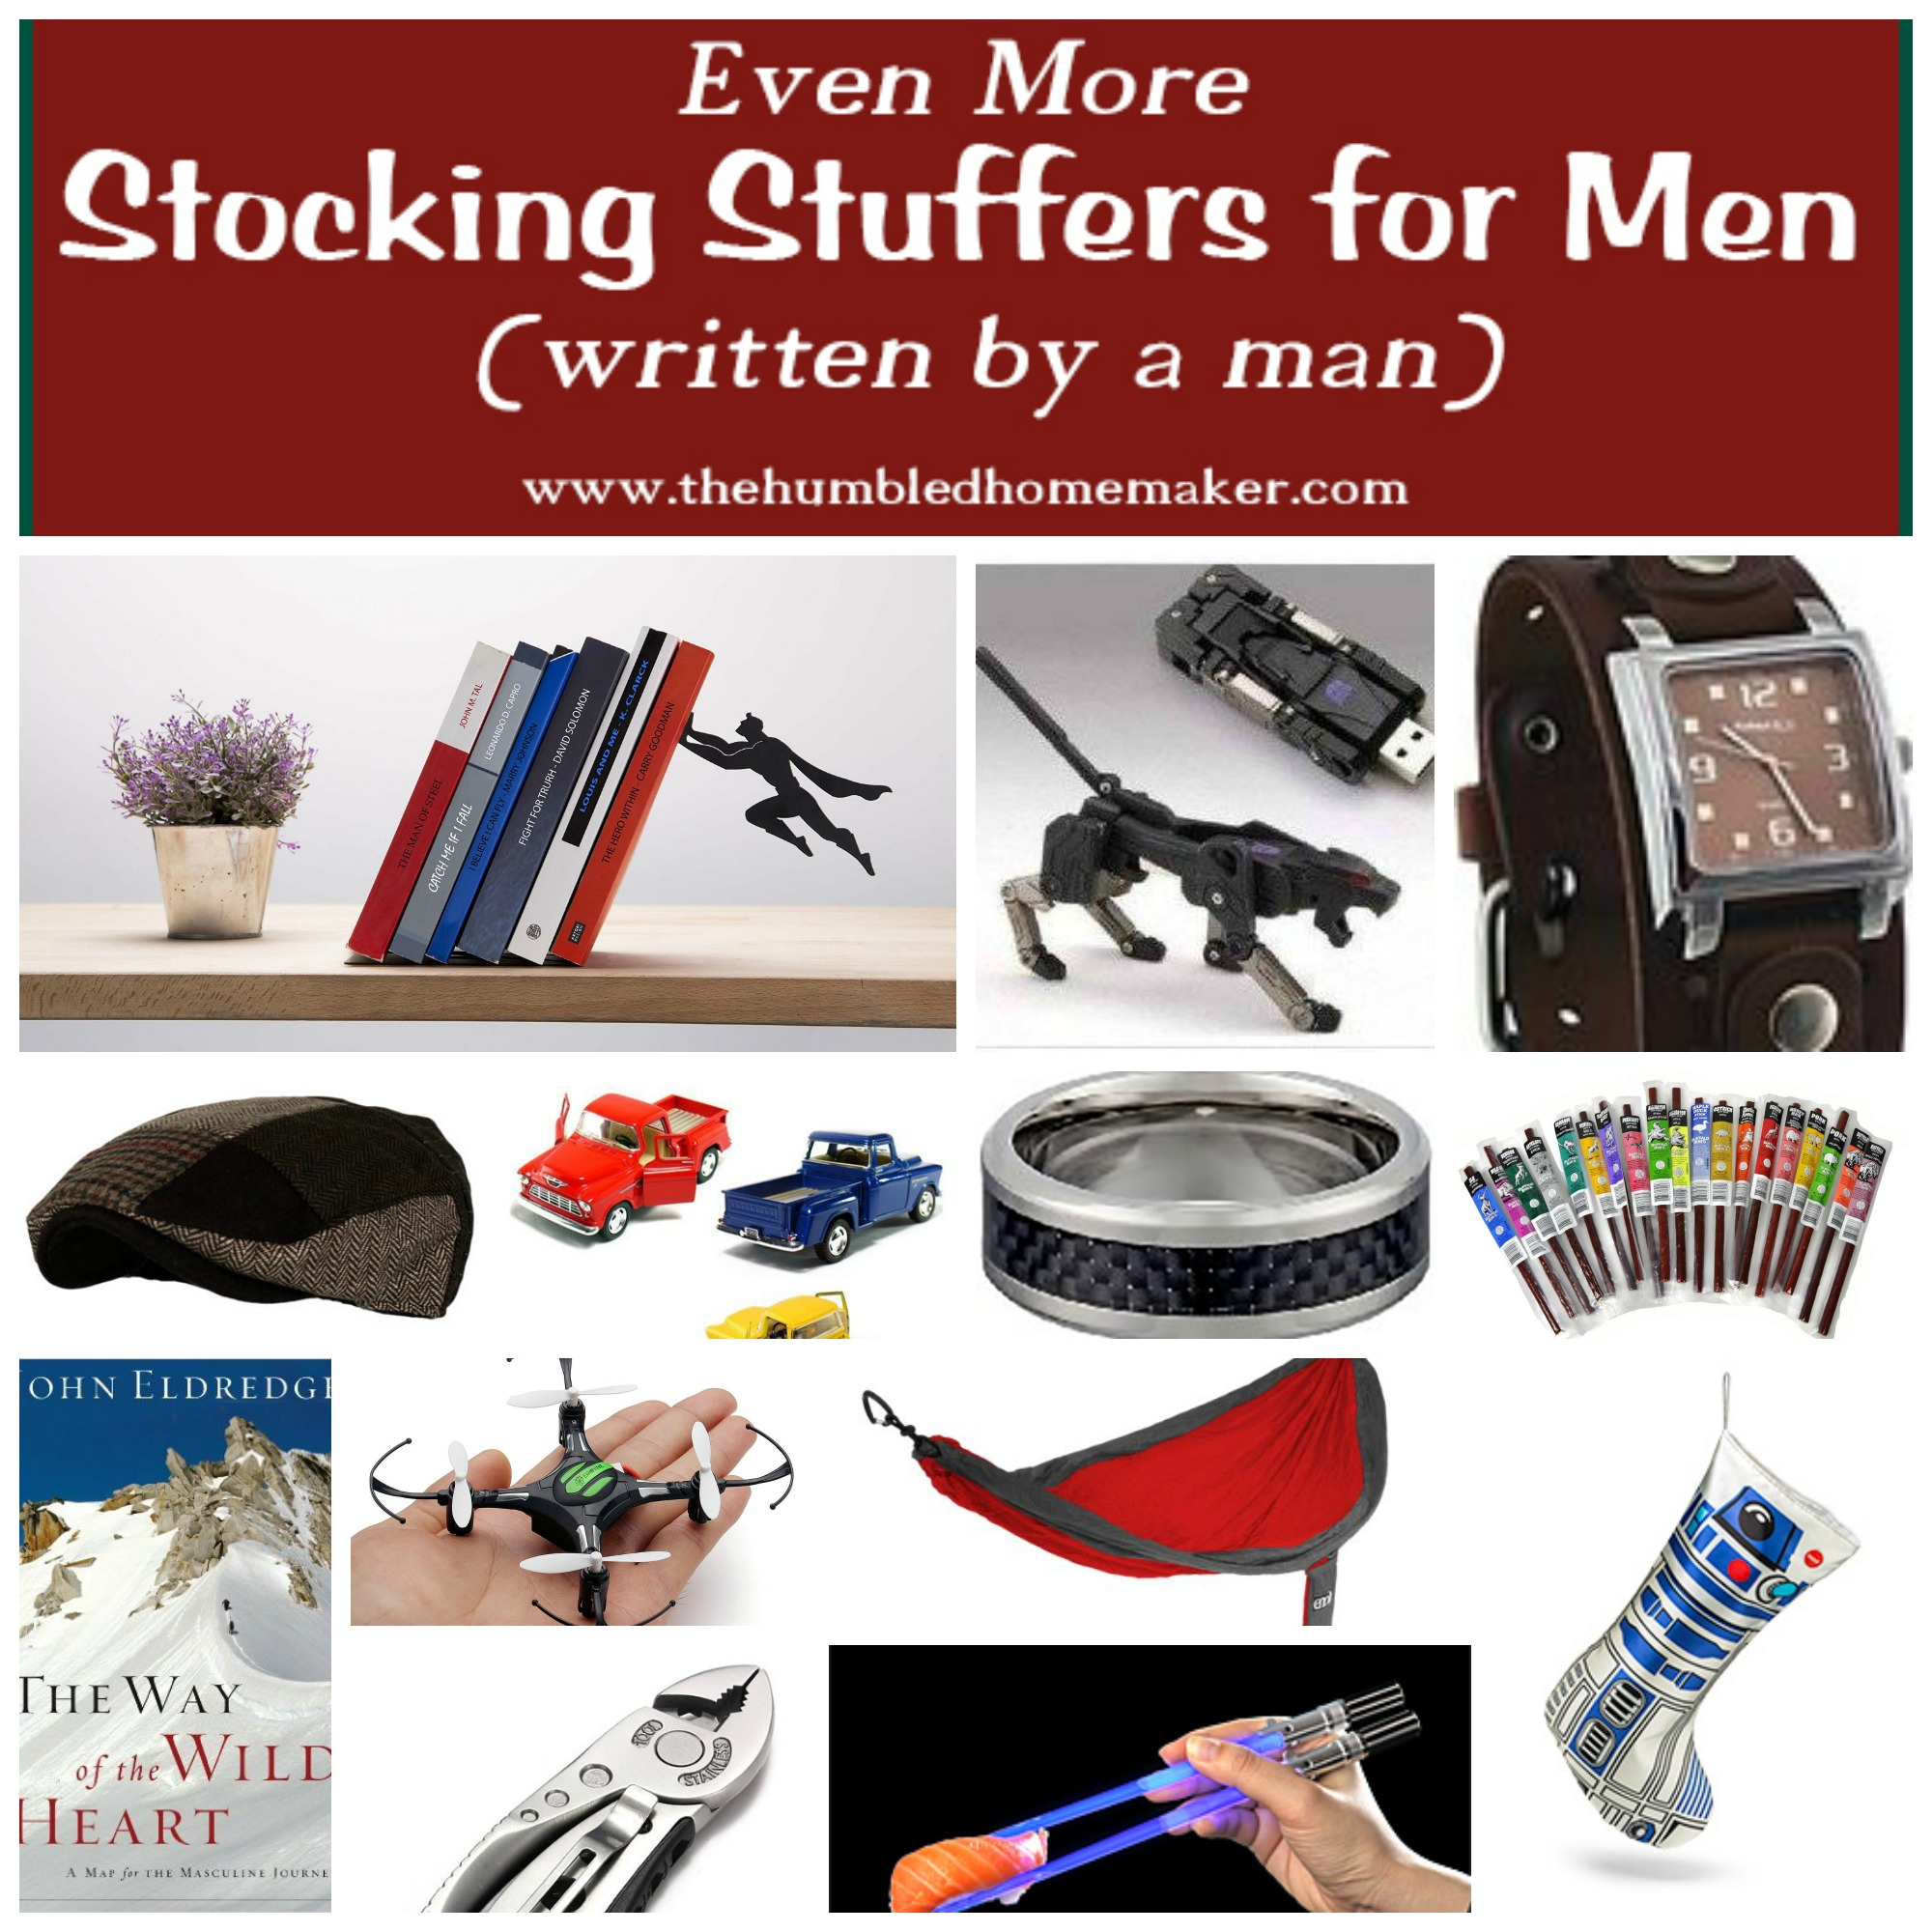 10 Best Stocking Stuffer Ideas For Guys even more stocking stuffers for men writtena man 2 2022